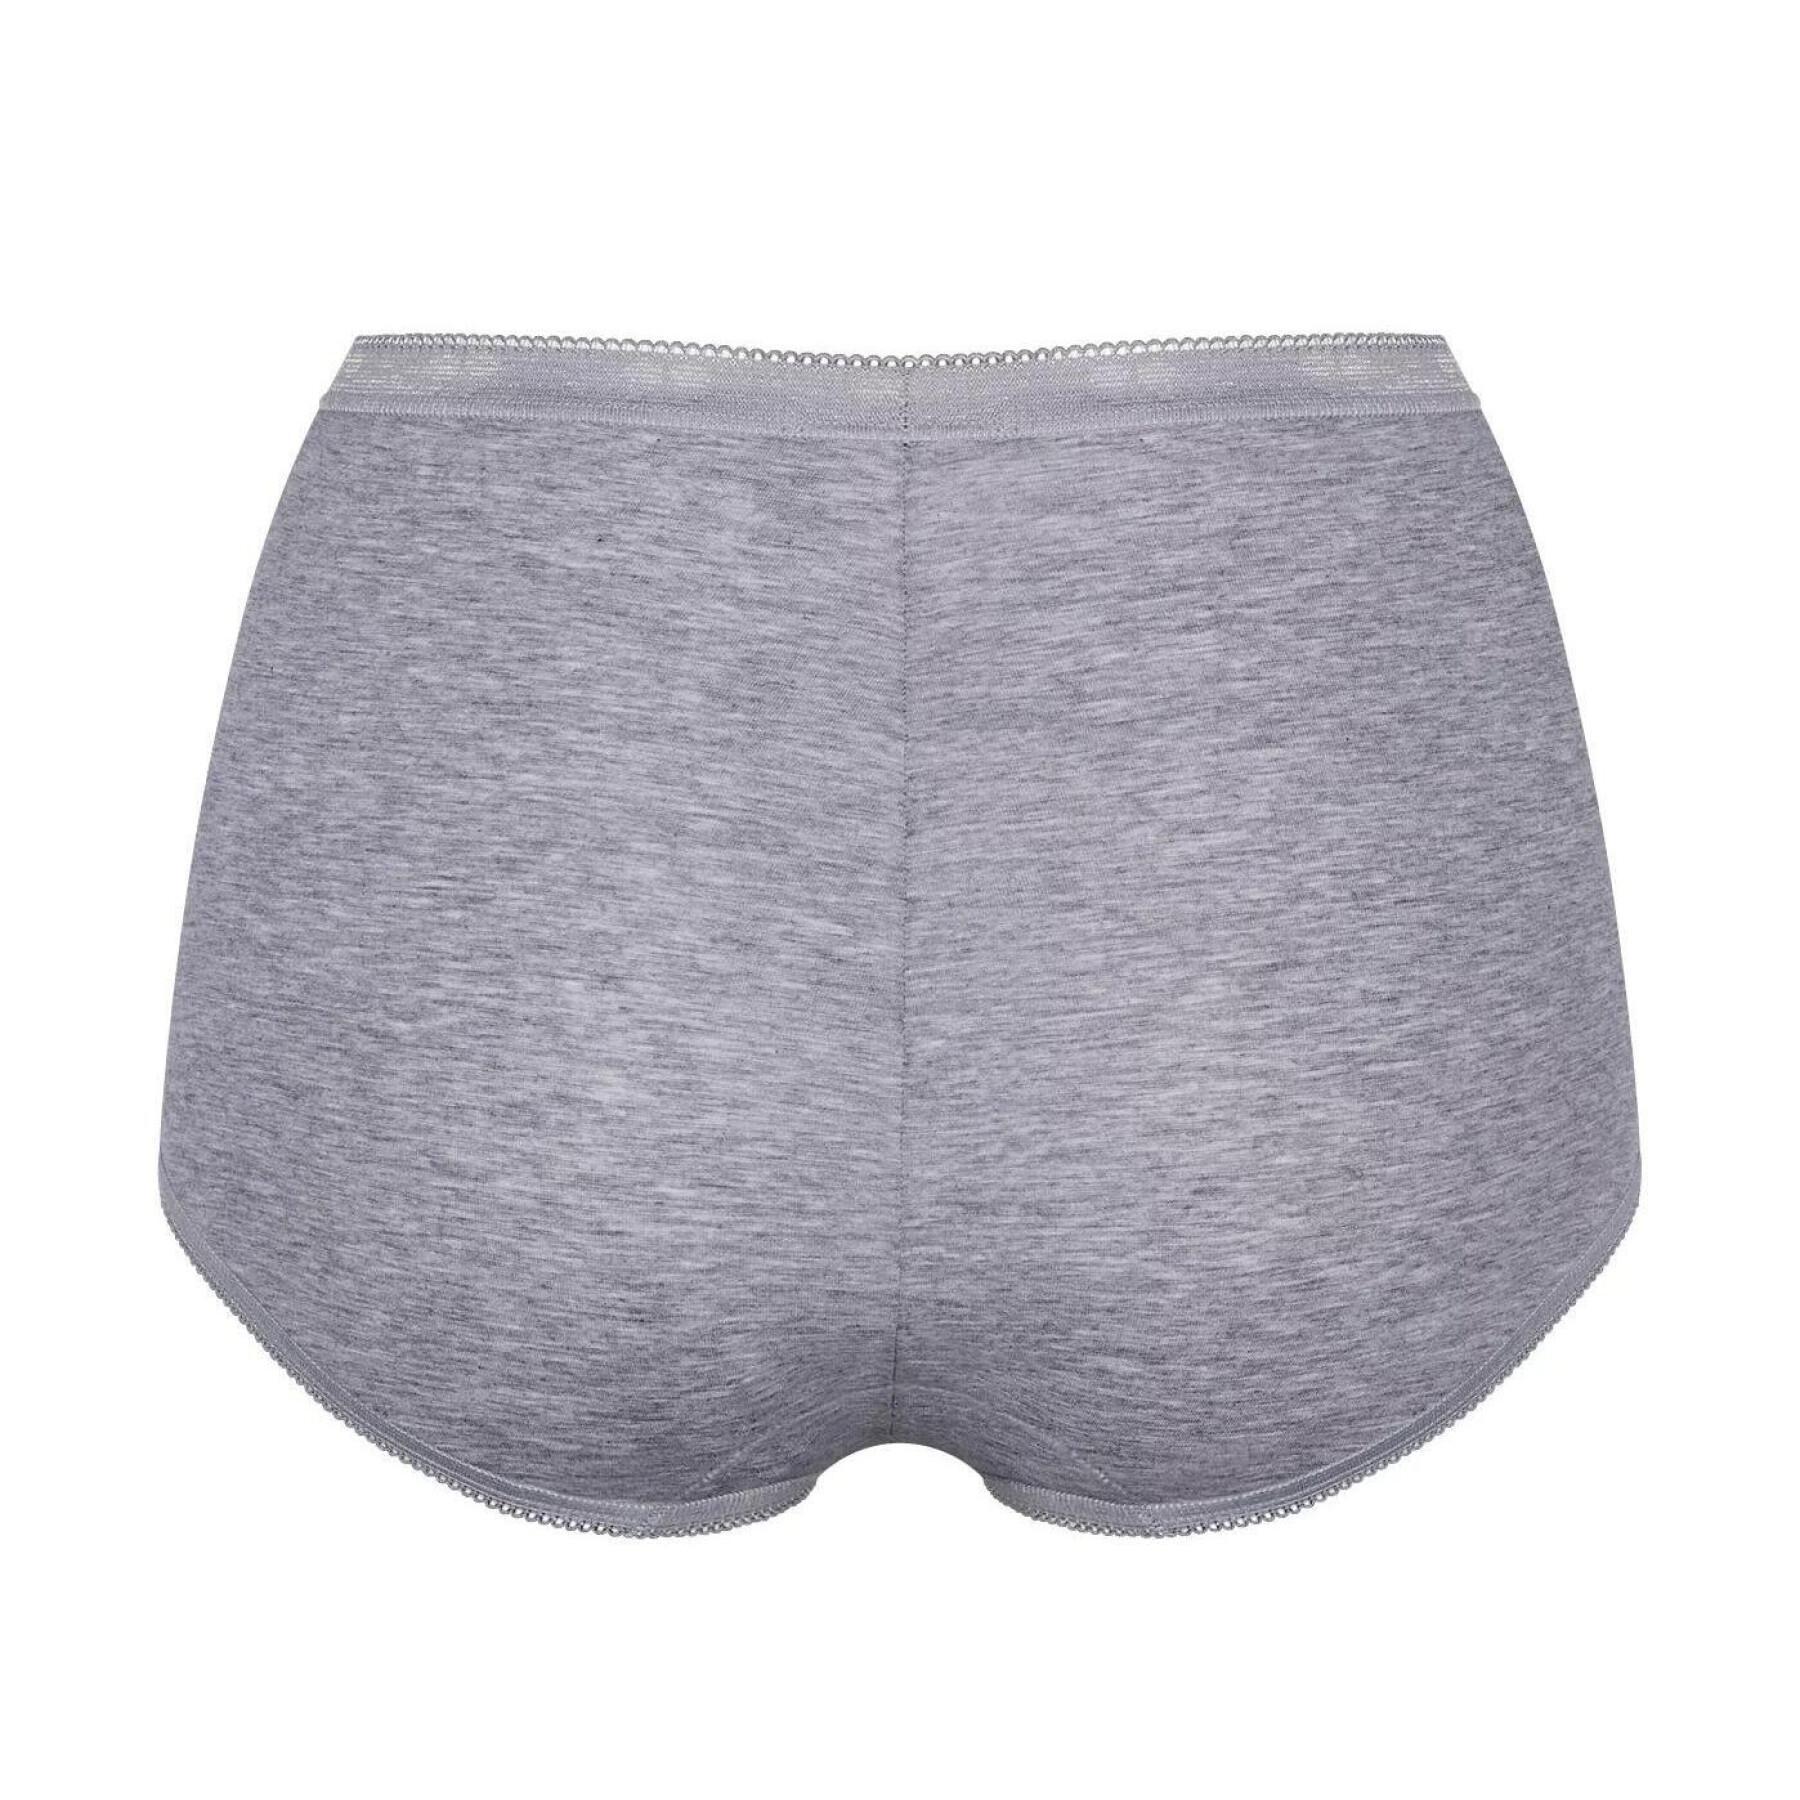 Set of 3 women's panties Sloggi Basic+ Maxi